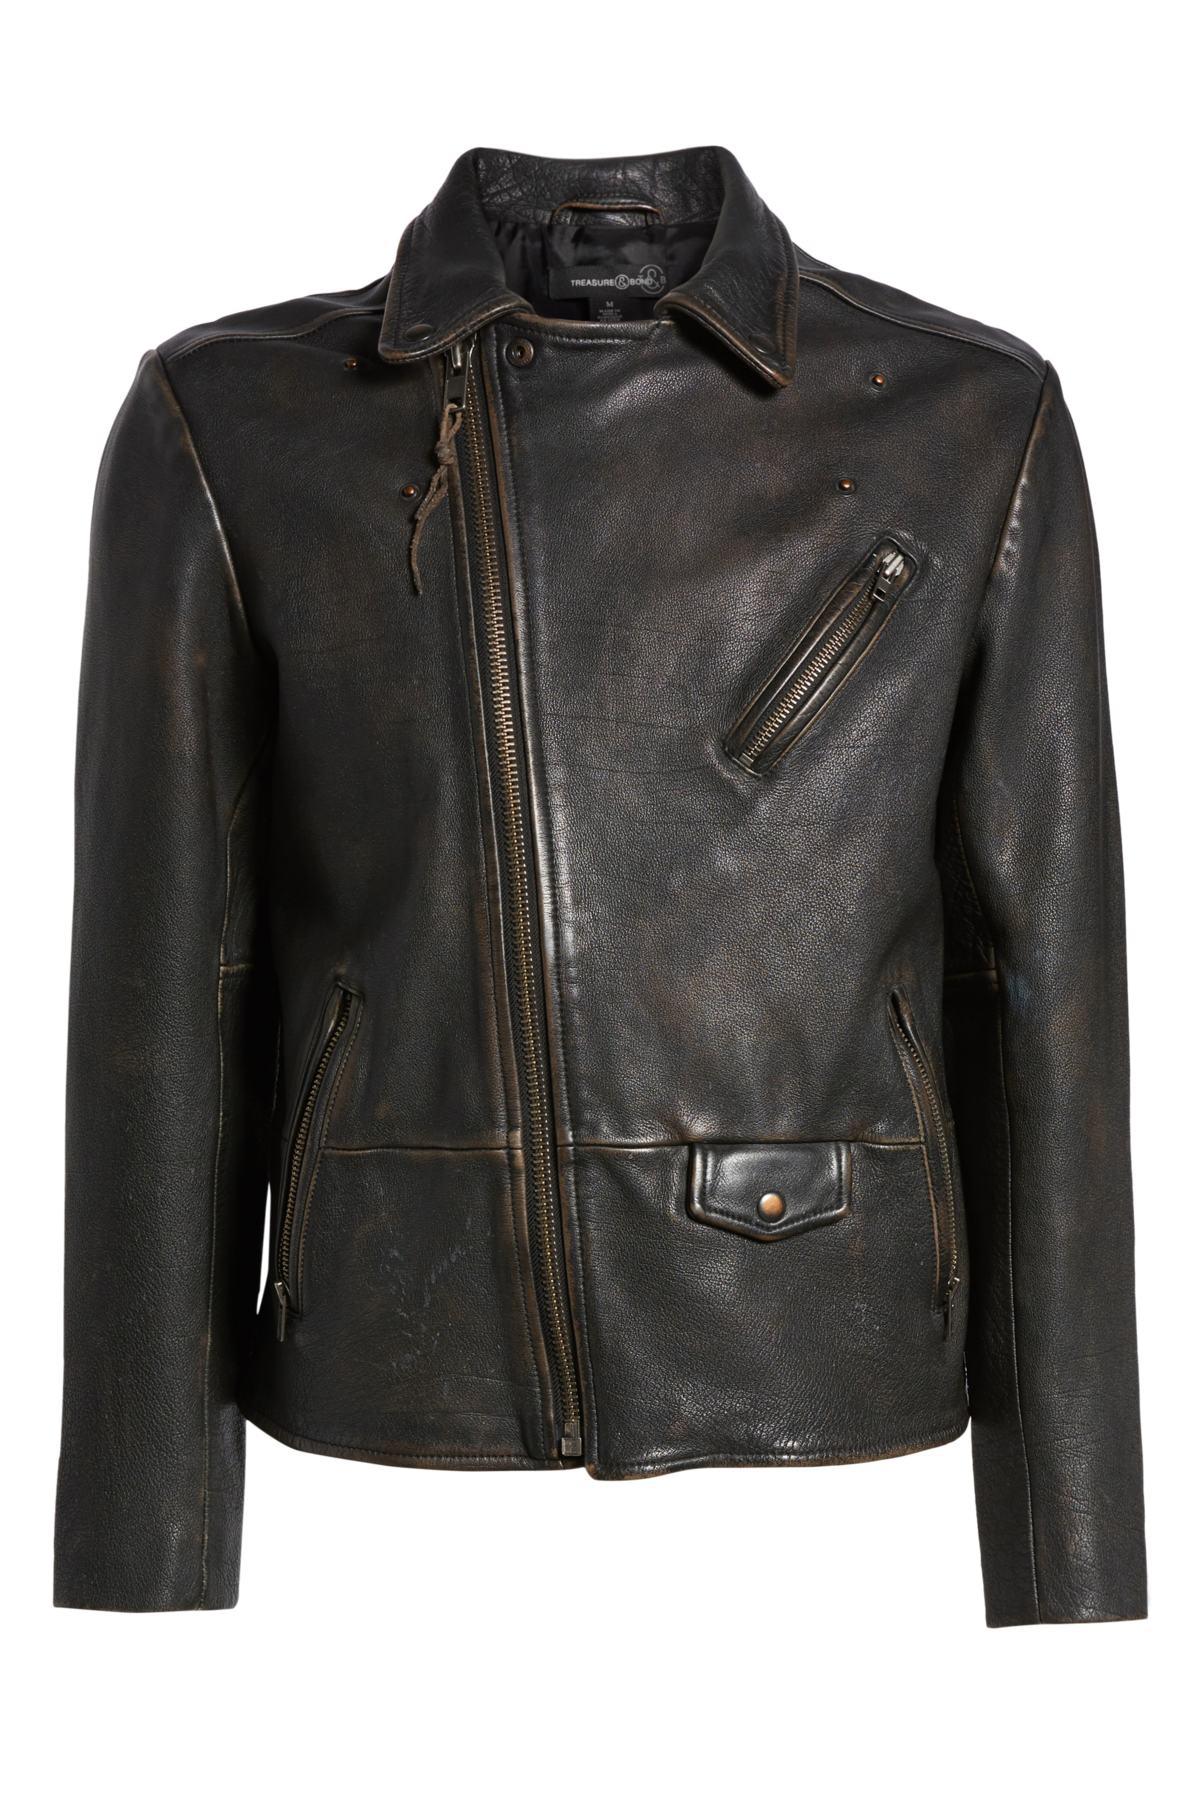 Treasure & Bond Trim Fit Leather Biker Jacket in Black for Men - Lyst